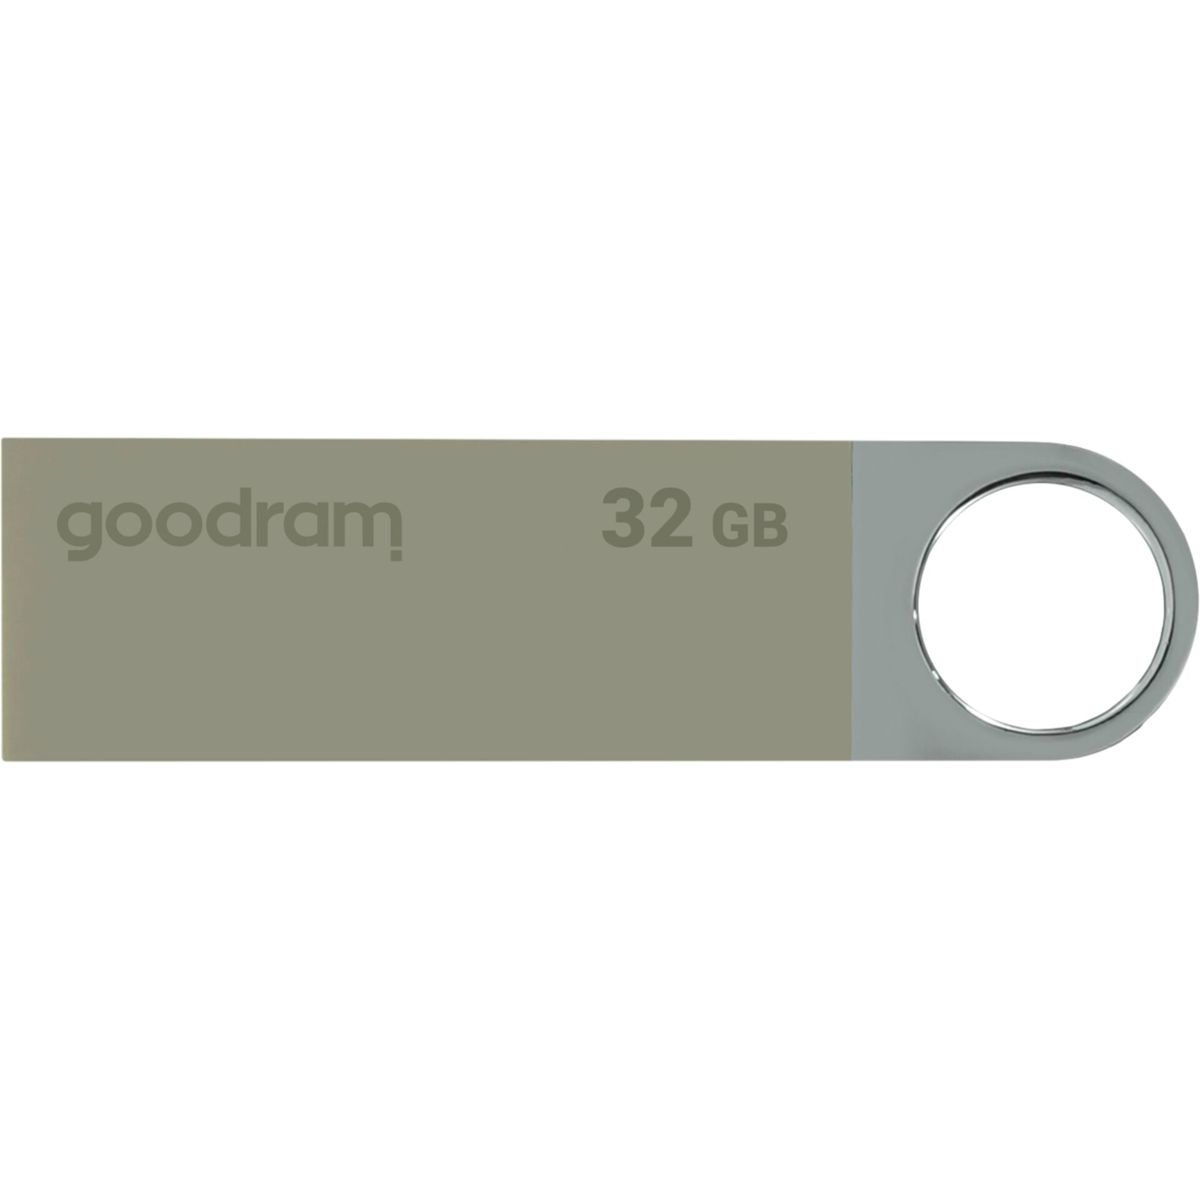 UUN2 2.0 32GB GOODRAM USB GB) USB Stick Silver (silber, 32